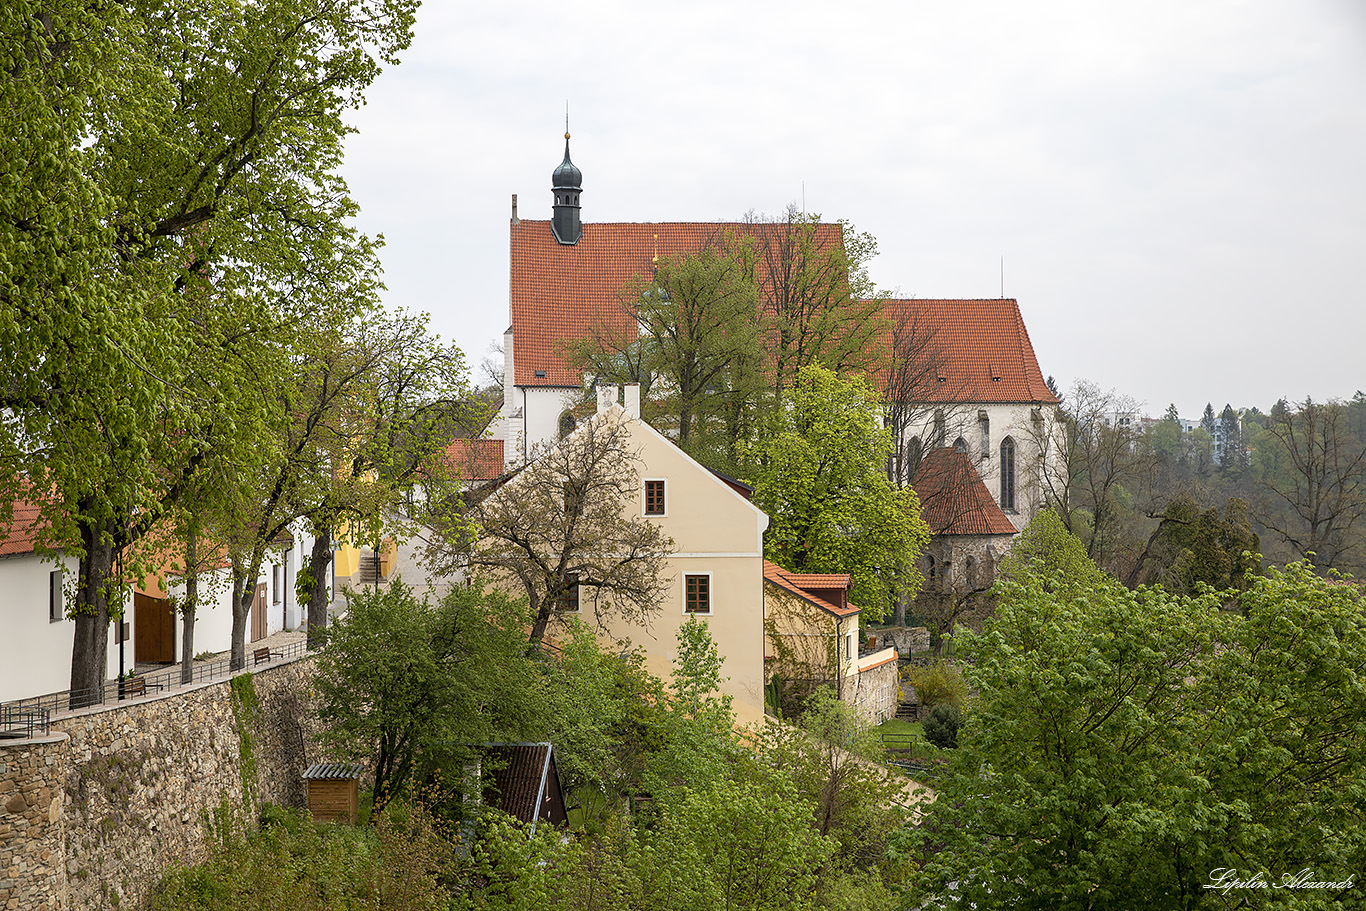 Бехине (Bechyně) - Чехия (Czech Republic)